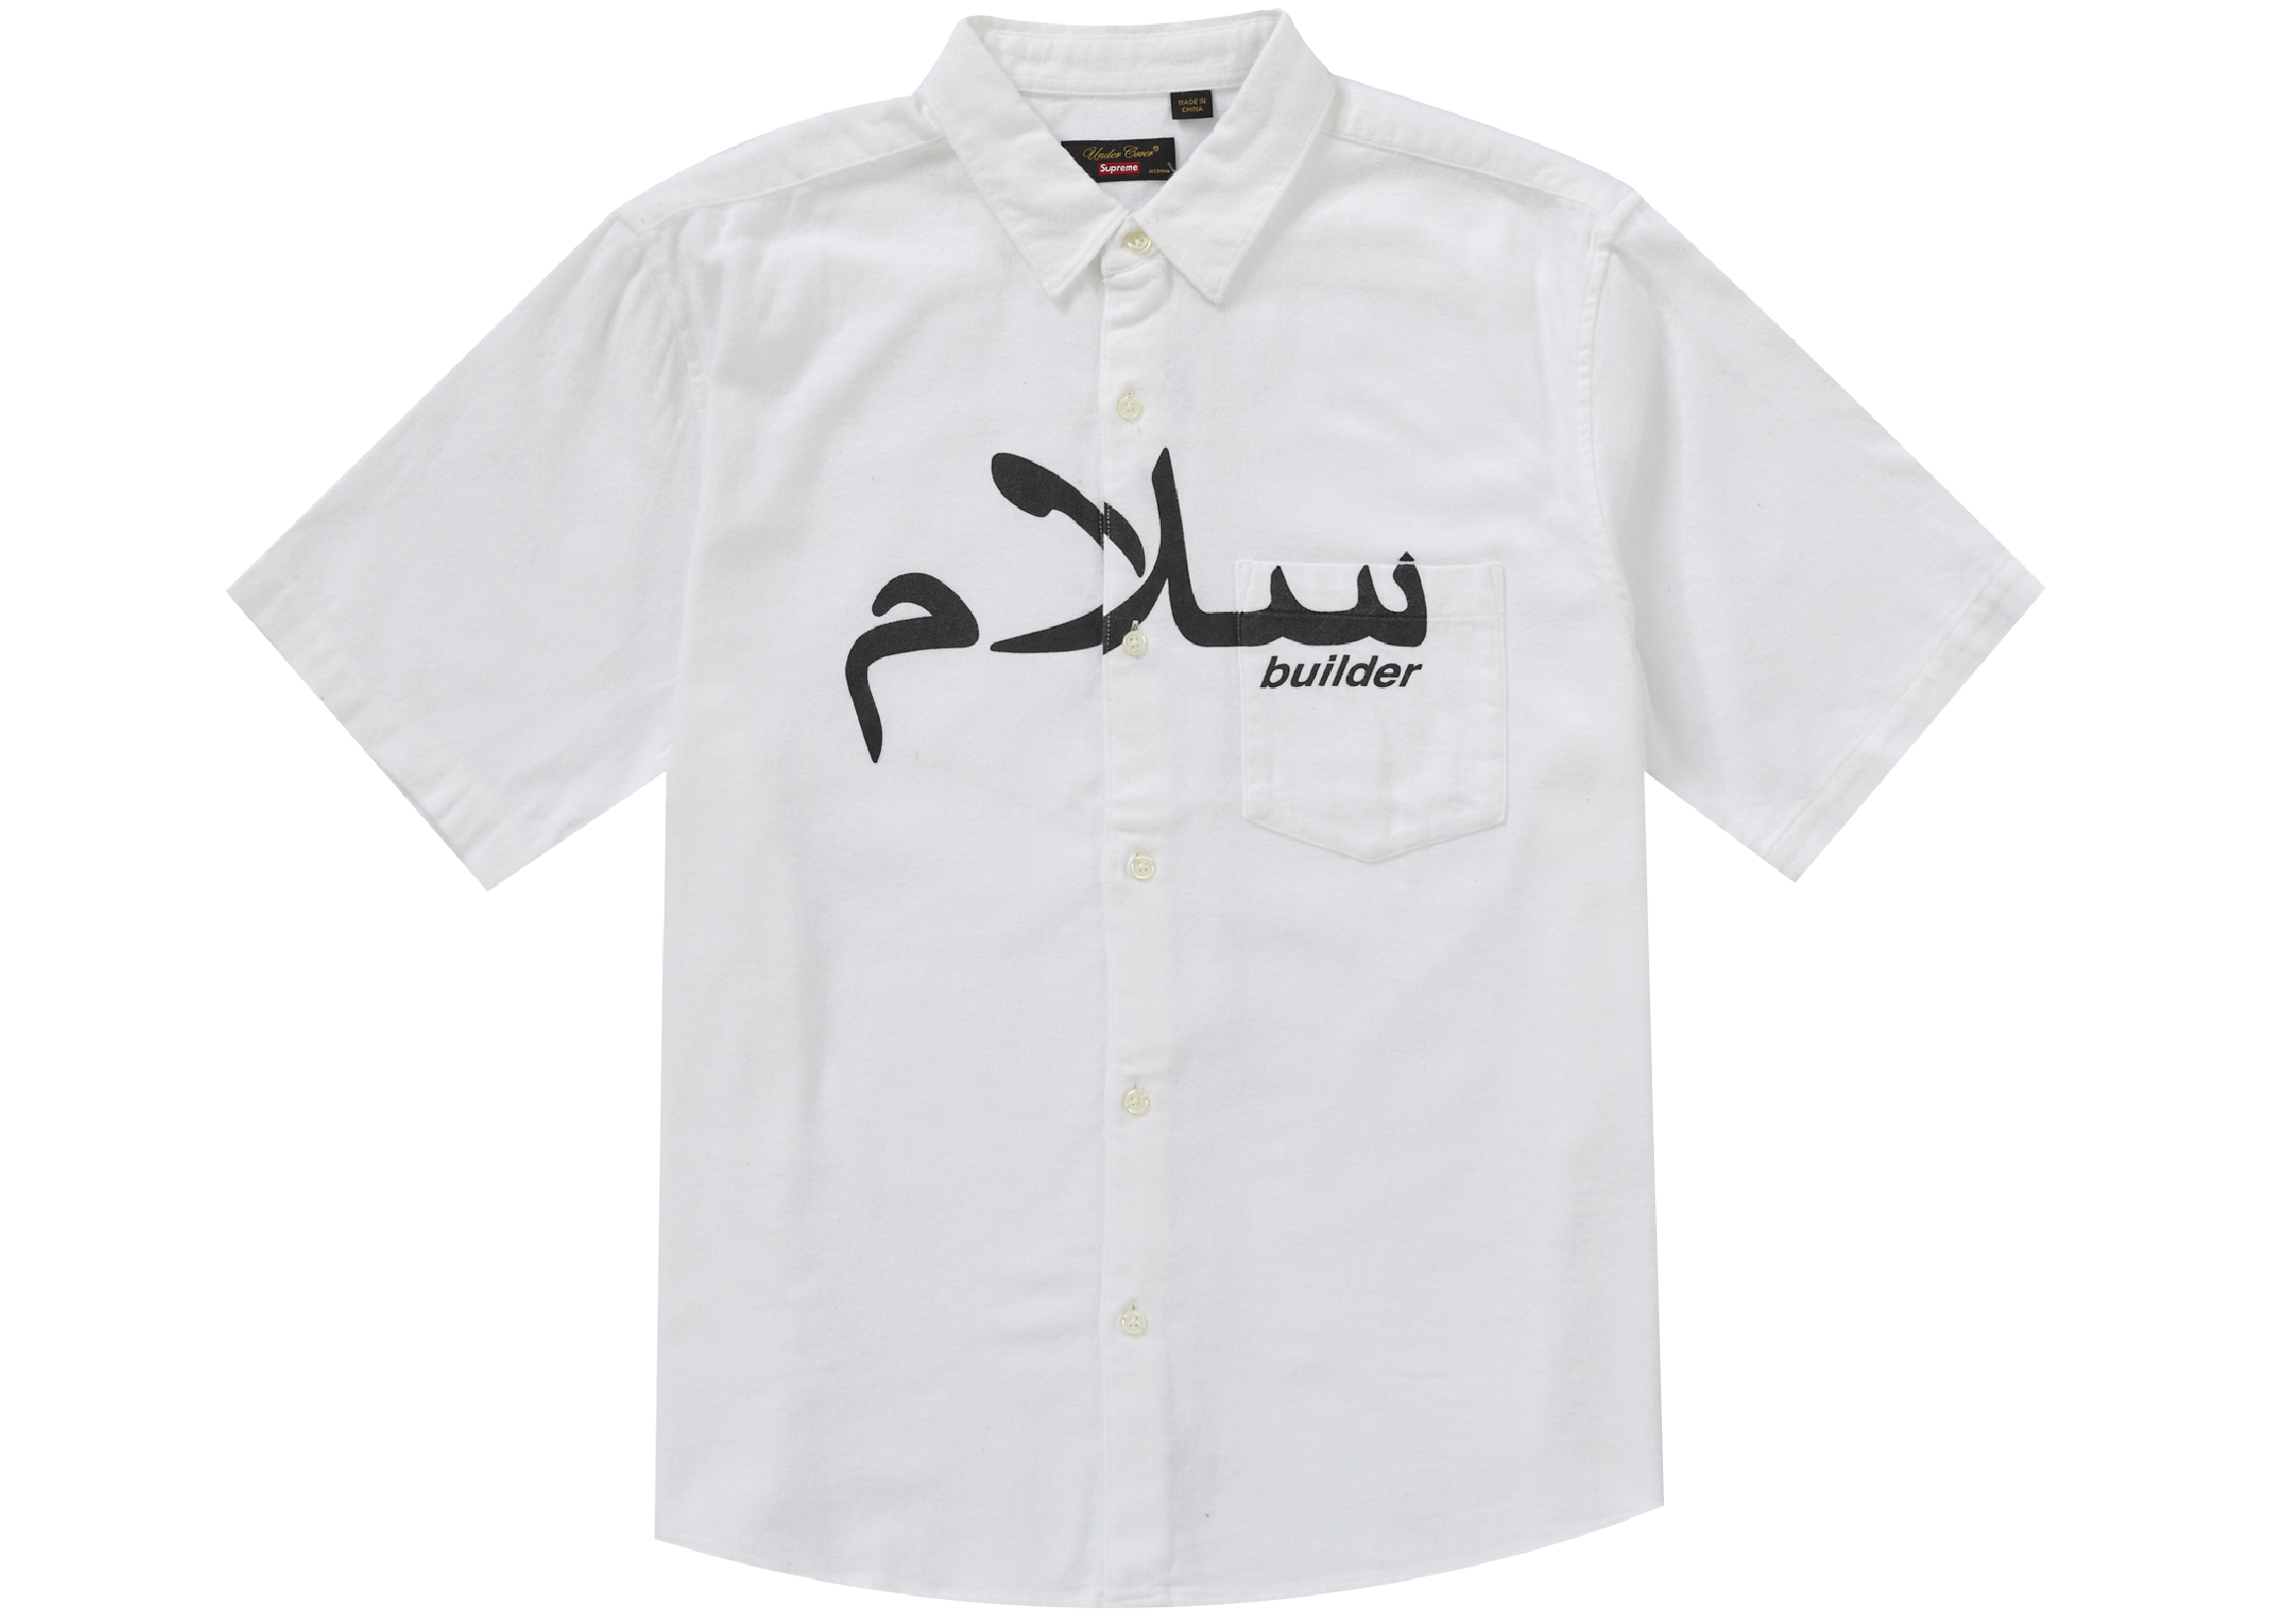 Supreme UNDERCOVER S/S Flannel Shirt White